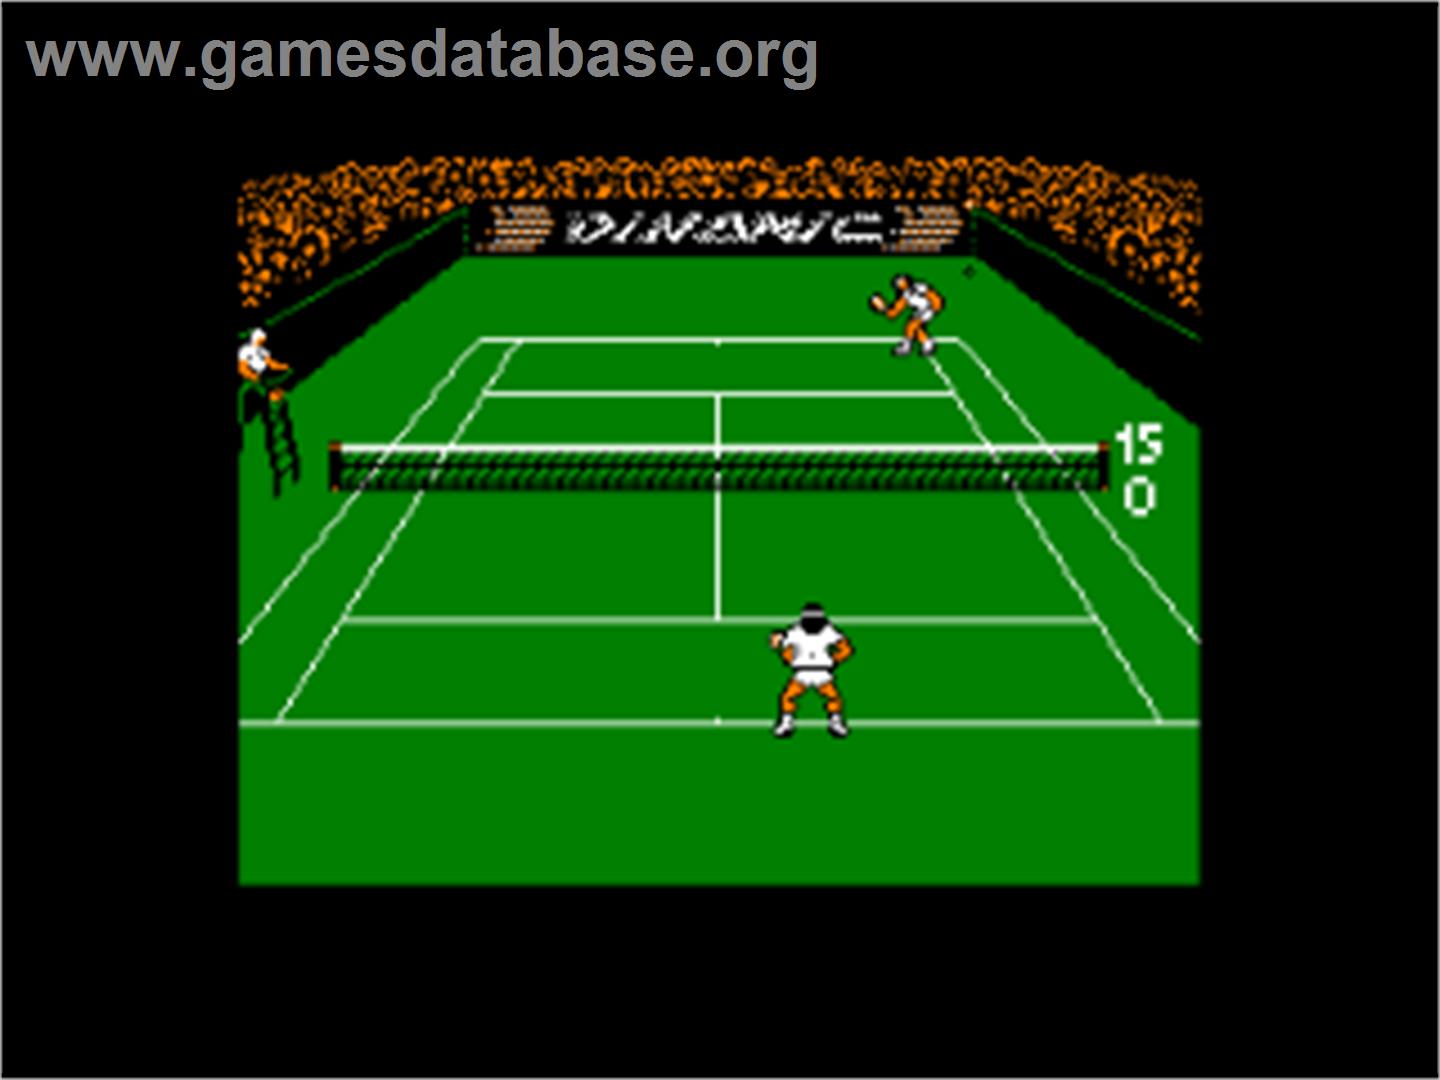 Simulador Profesional de Tenis - Amstrad CPC - Artwork - In Game